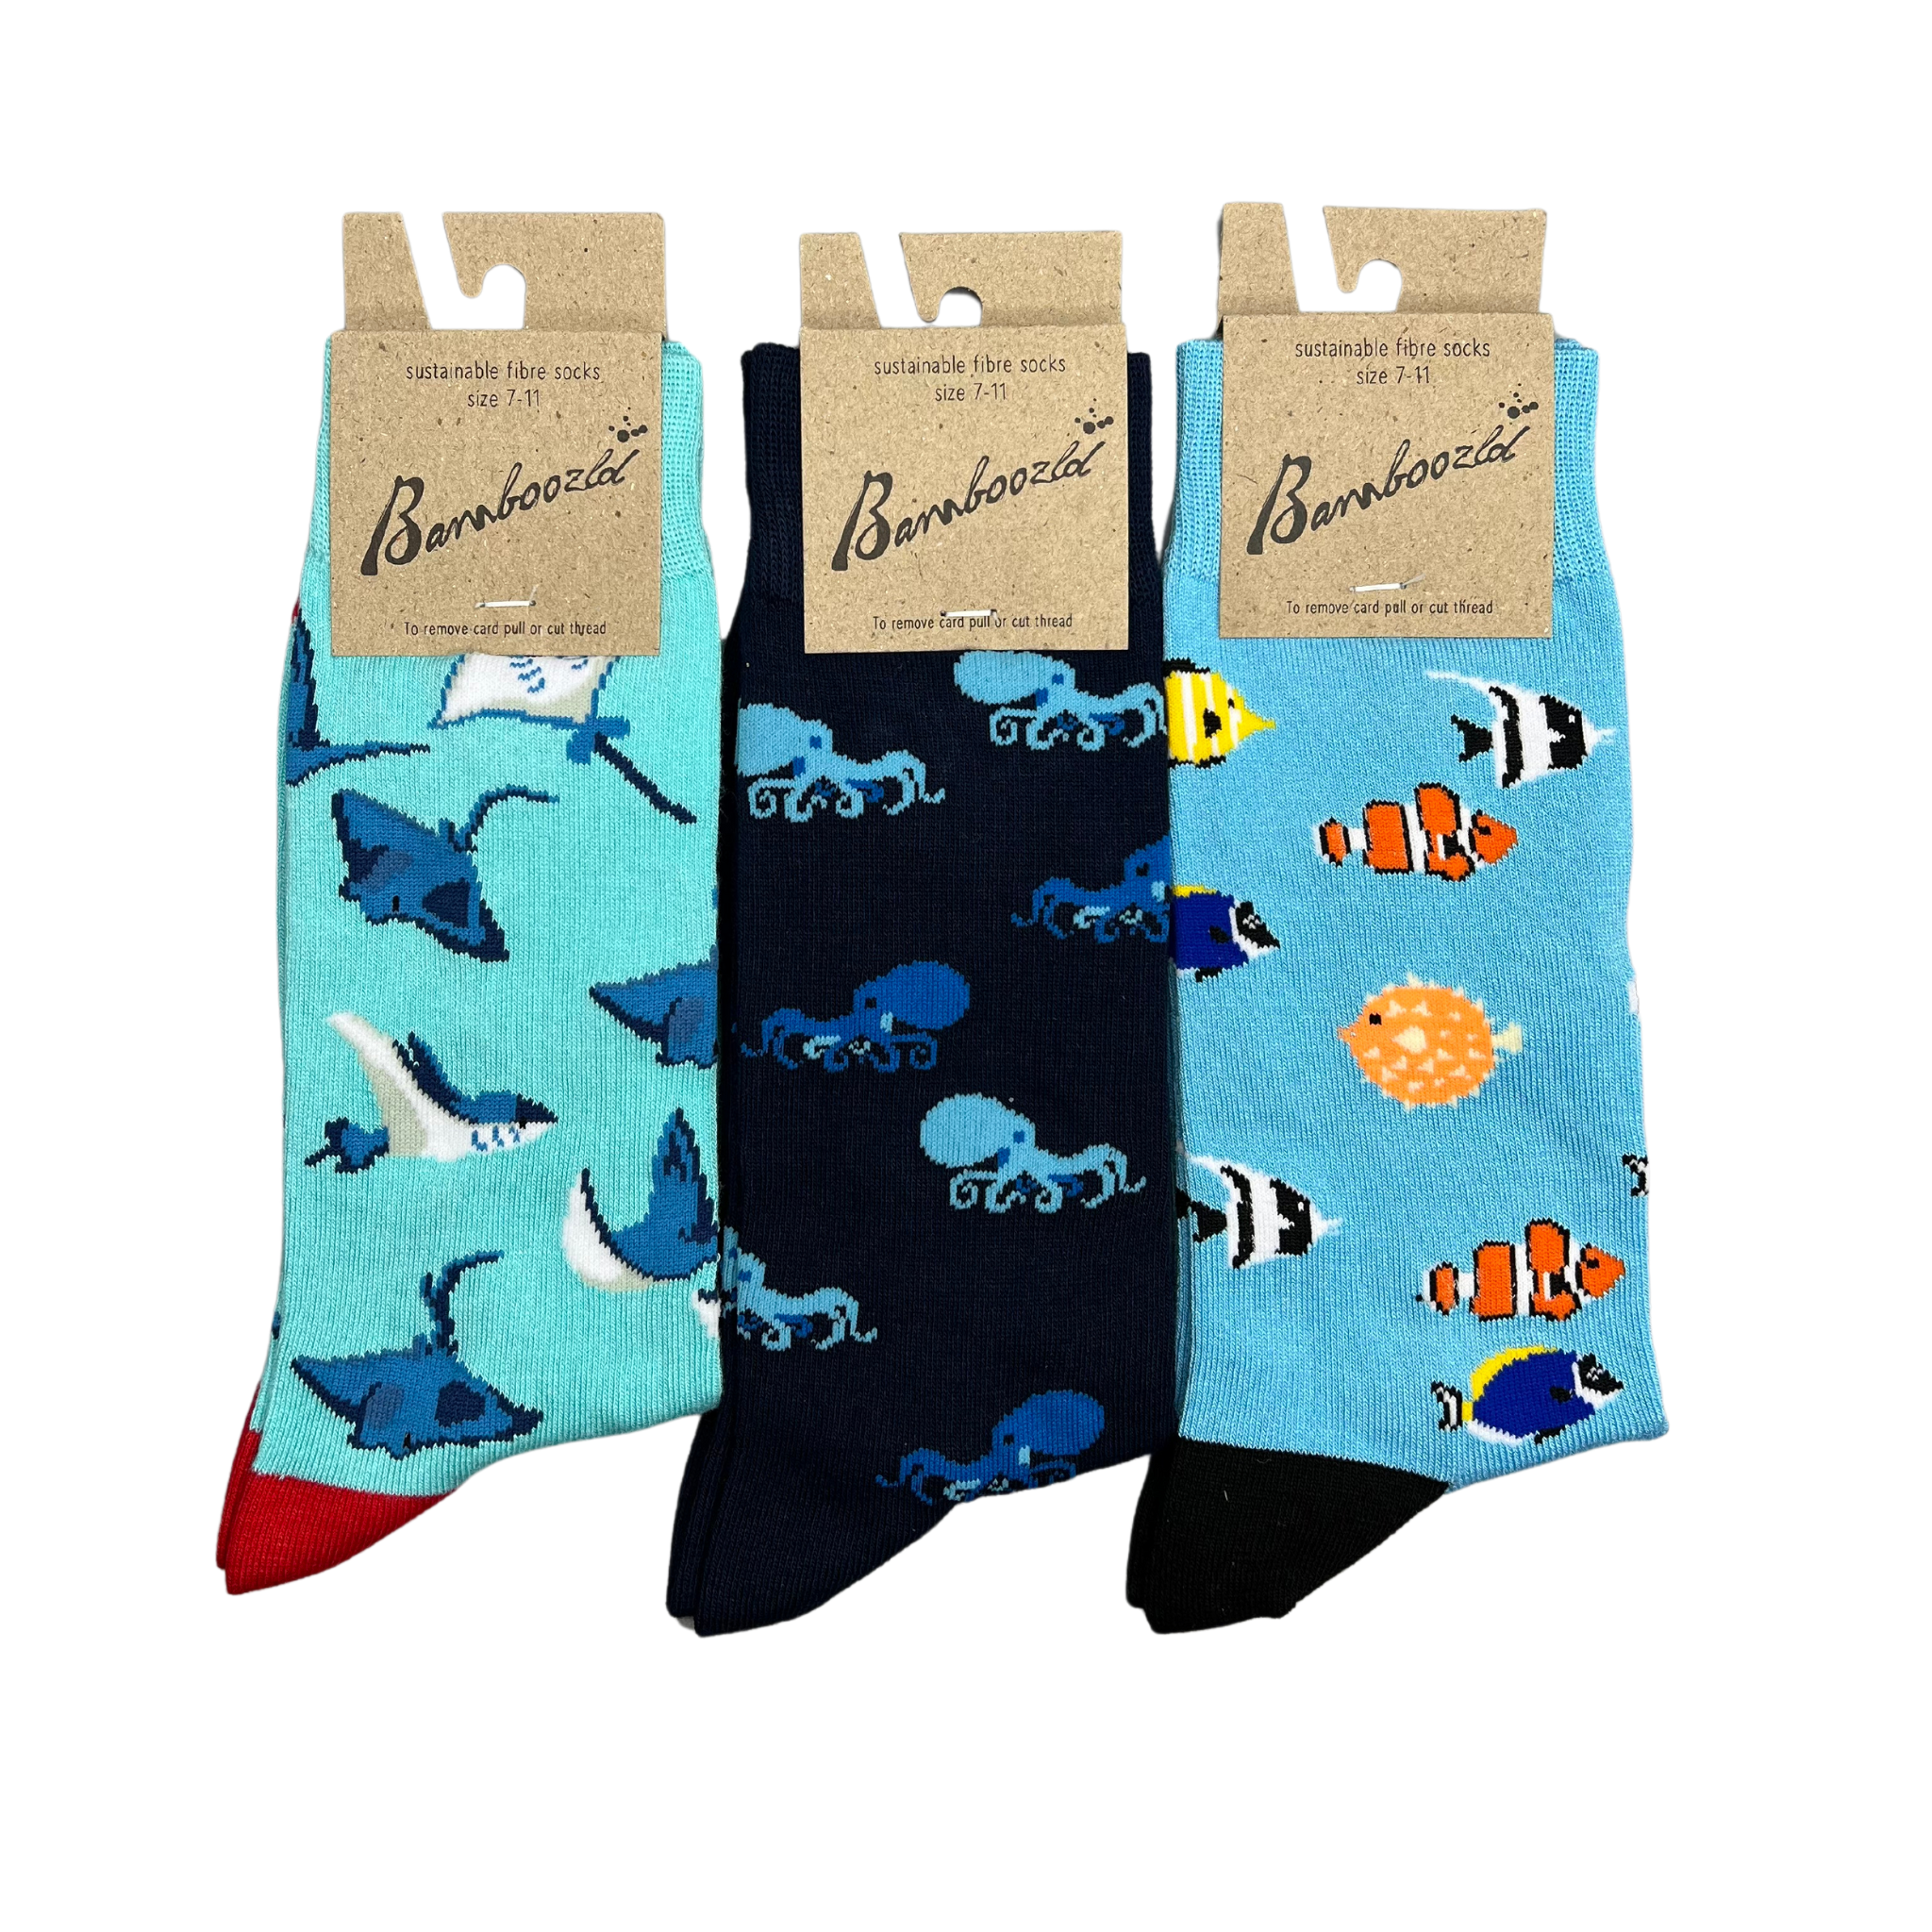 Bundle of 3 pairs of Men's socks - Marine Life